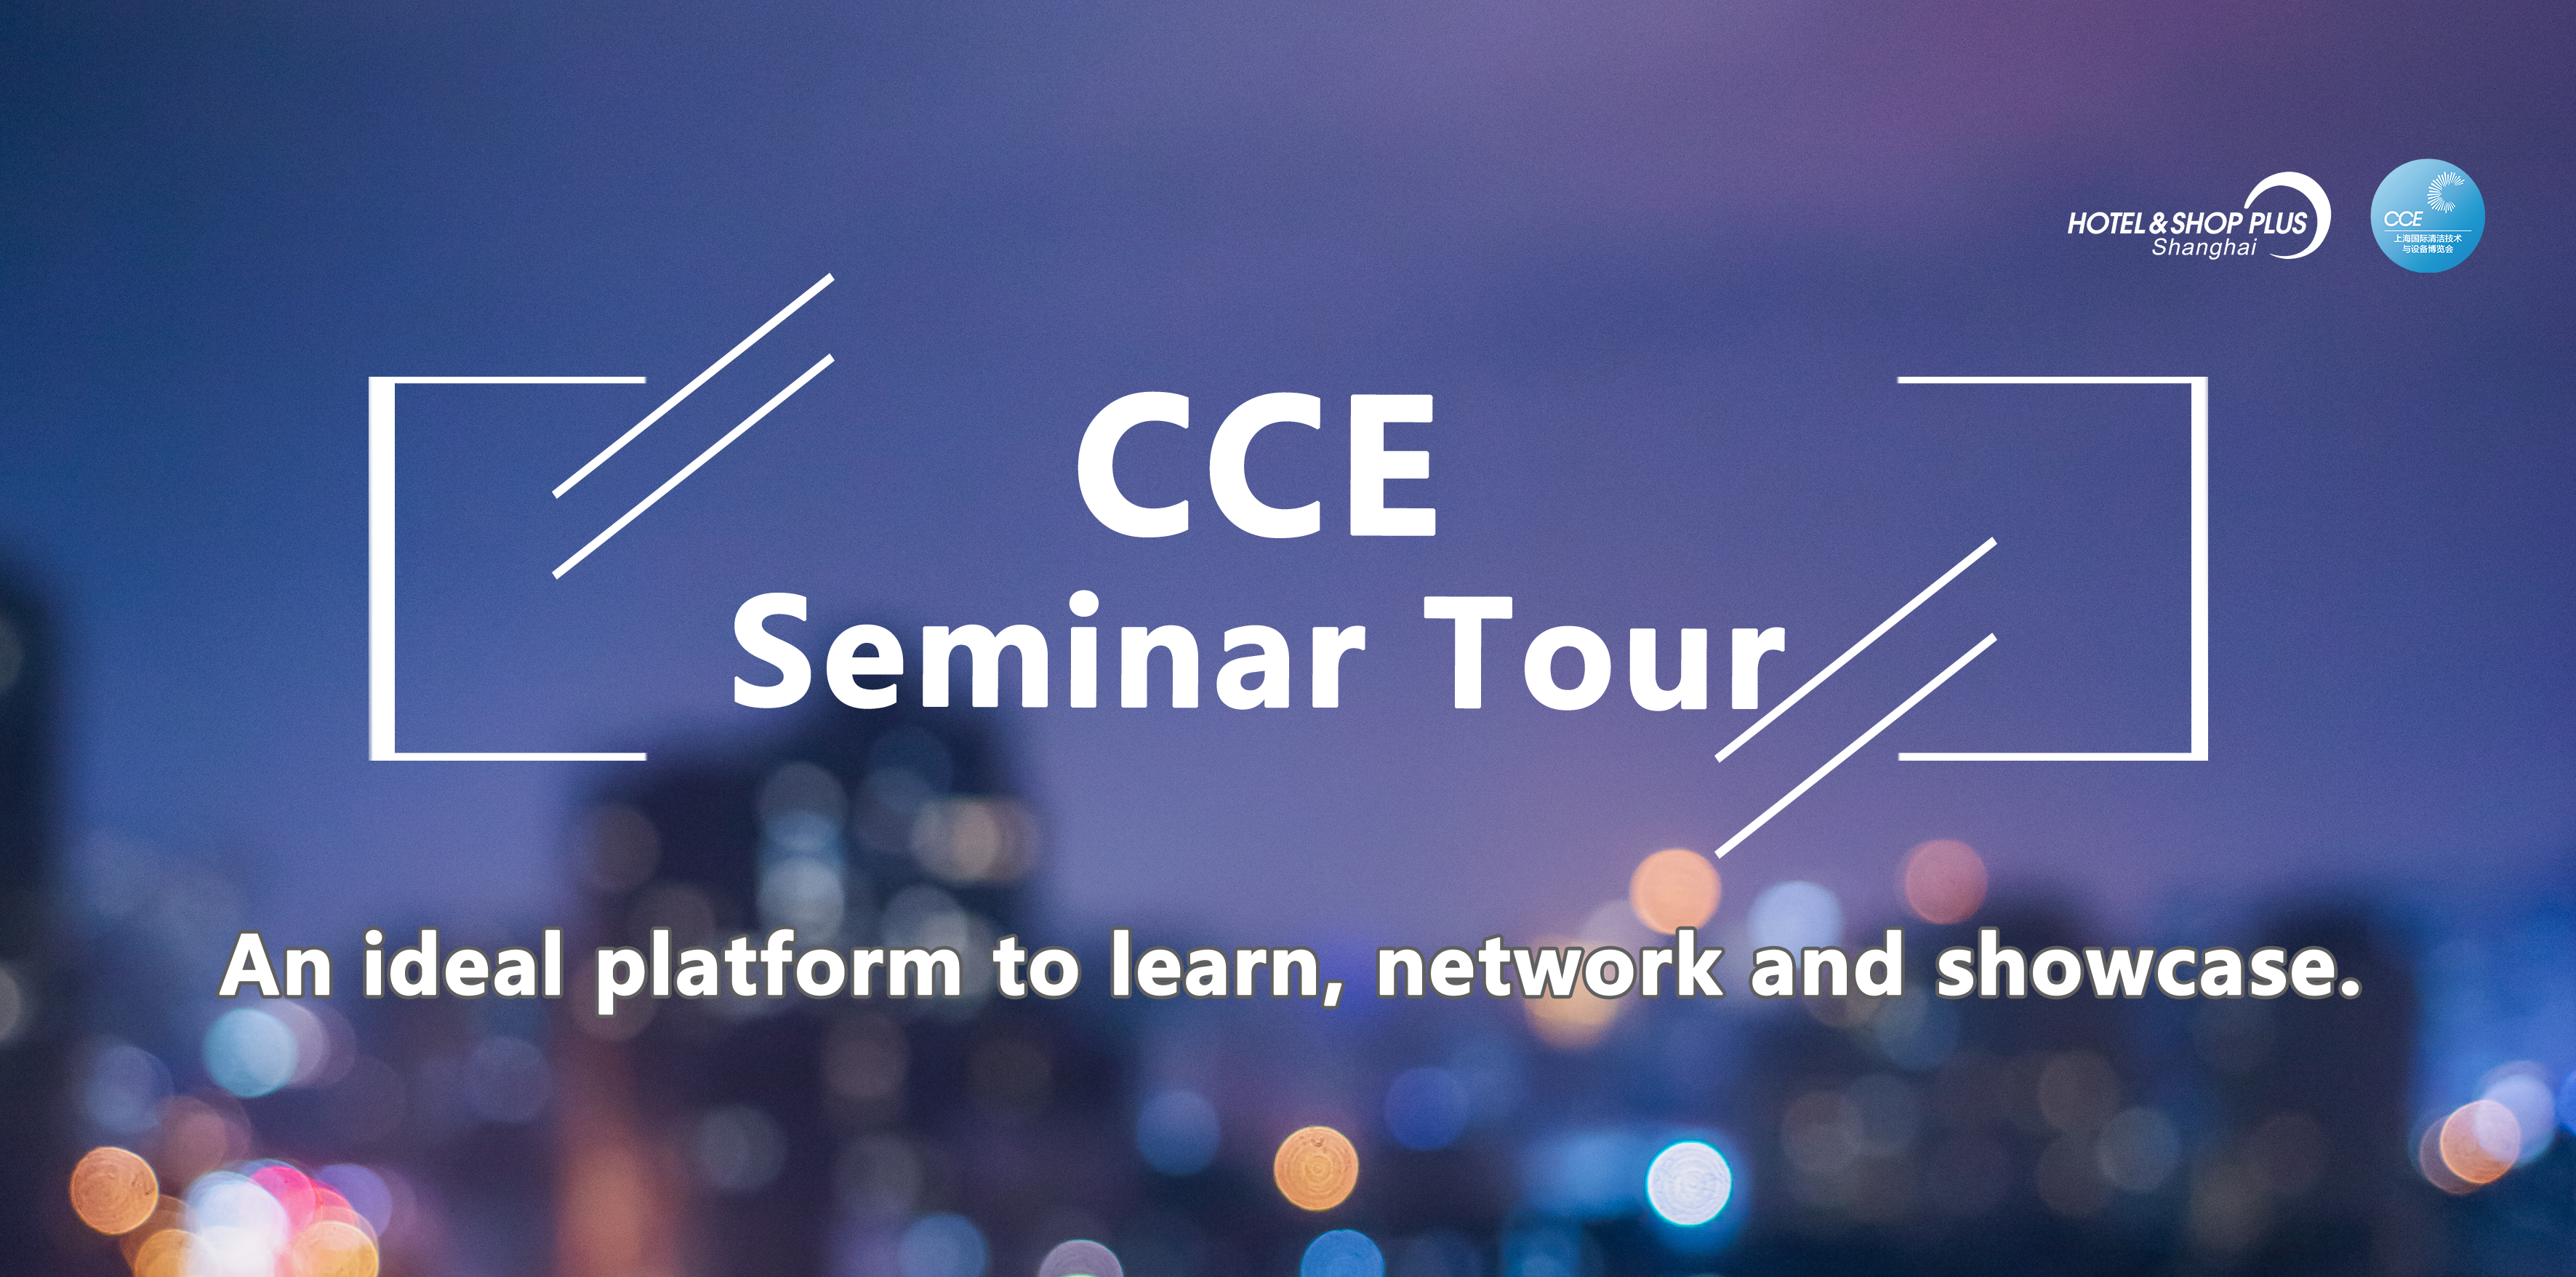 CCE Seminar Tour Banner